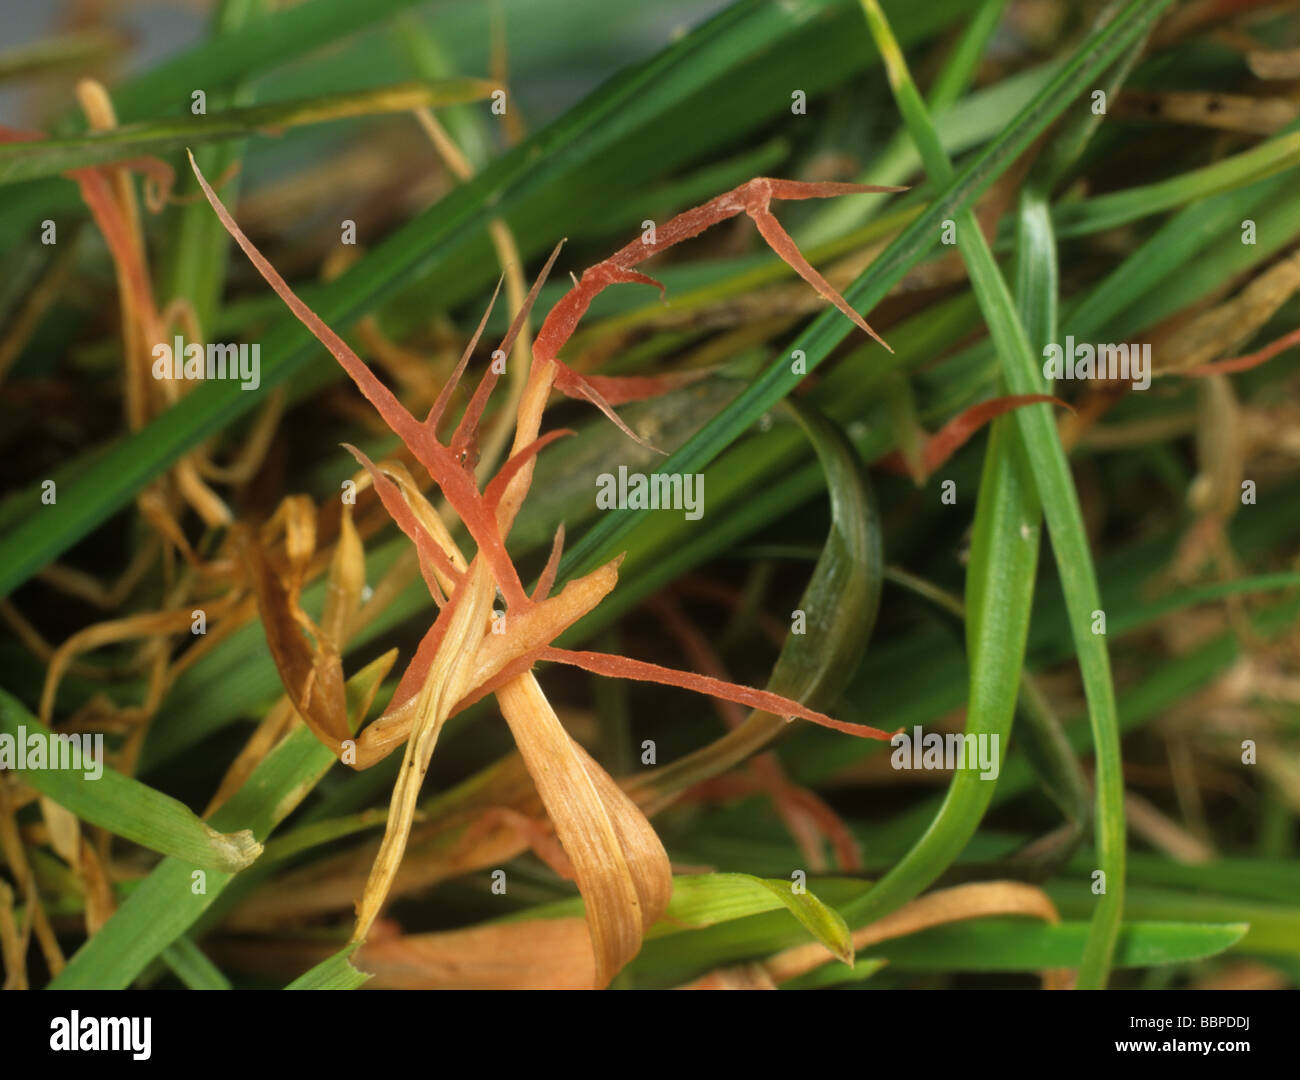 Red thread Laetisaria fuciformis red mycelial strands on turf grass Poa spp Stock Photo